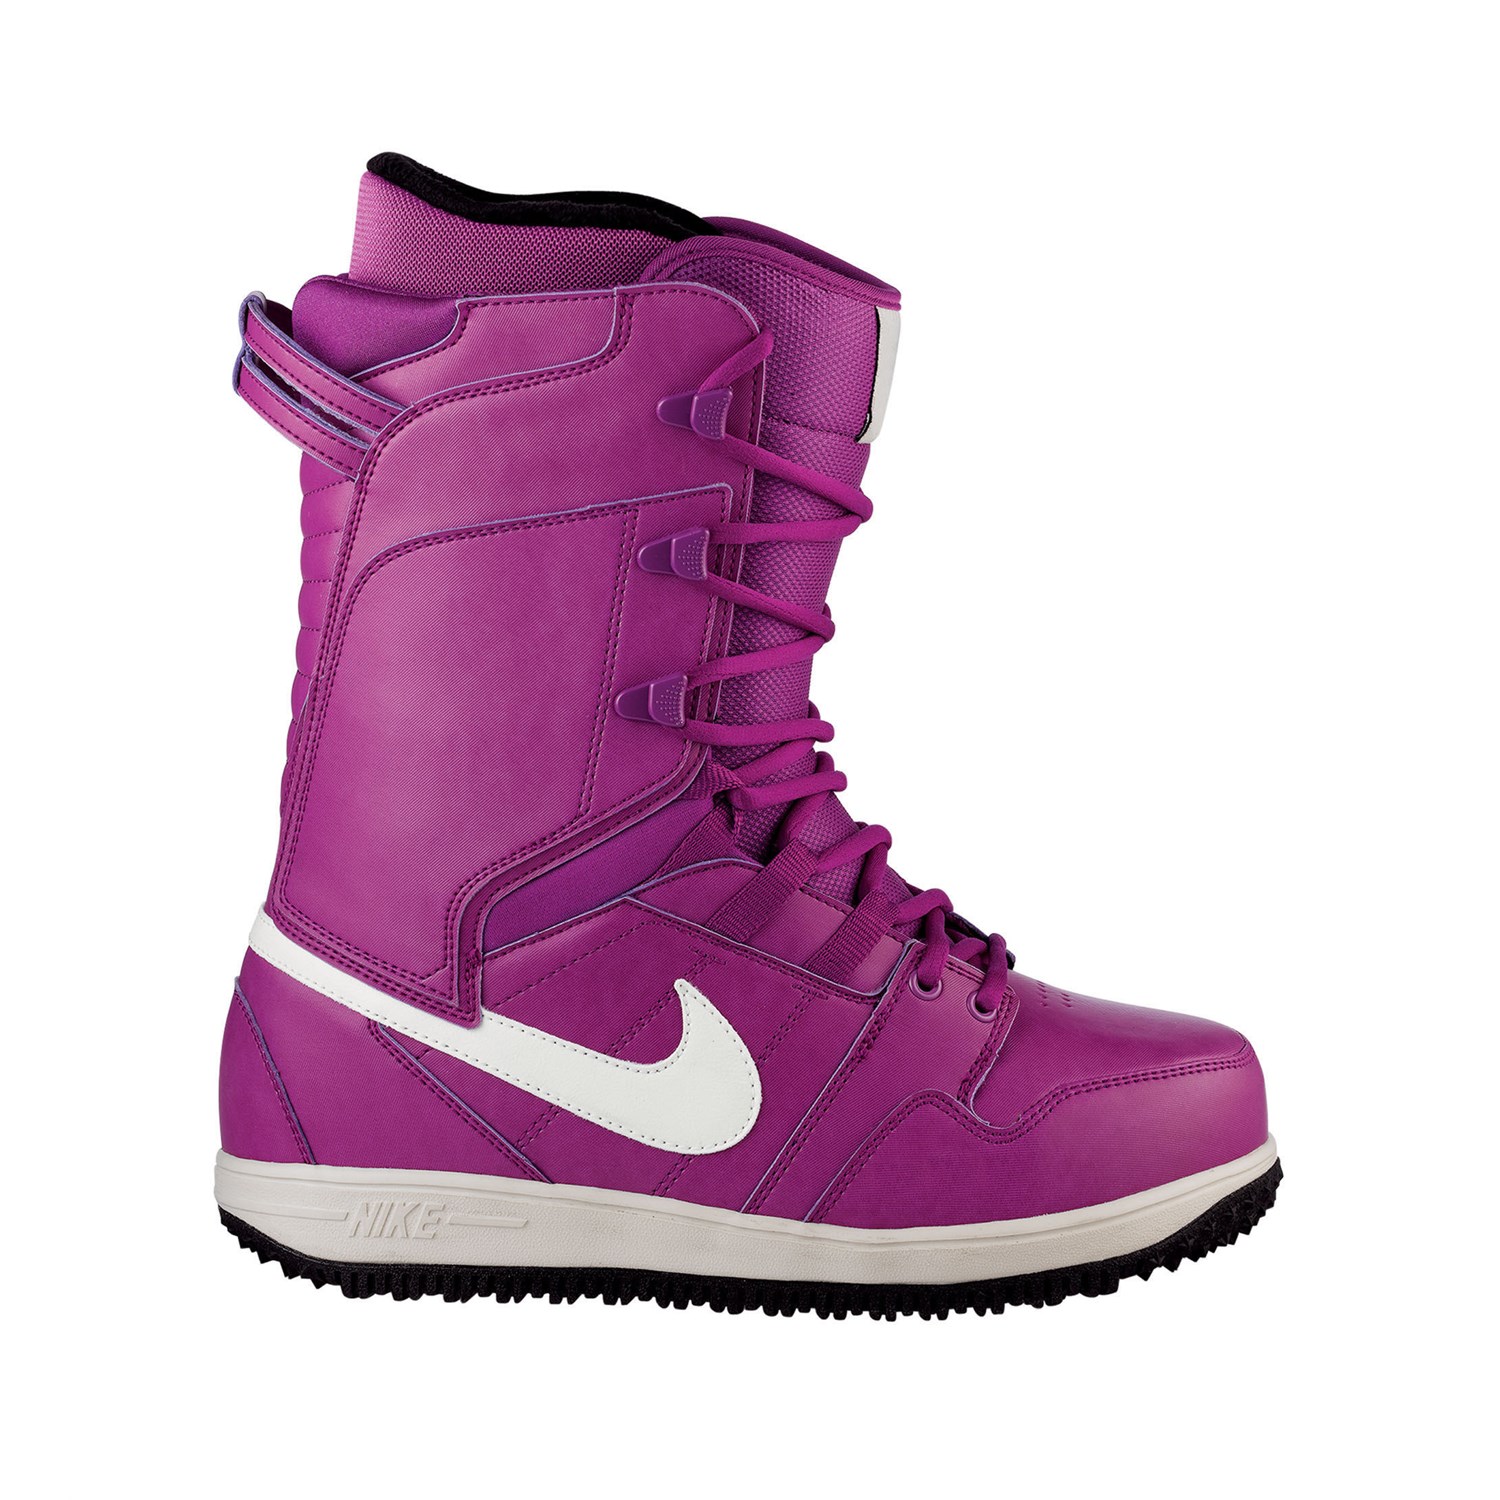 Nike Vapen Snowboard Boots - Women's 2012 | evo